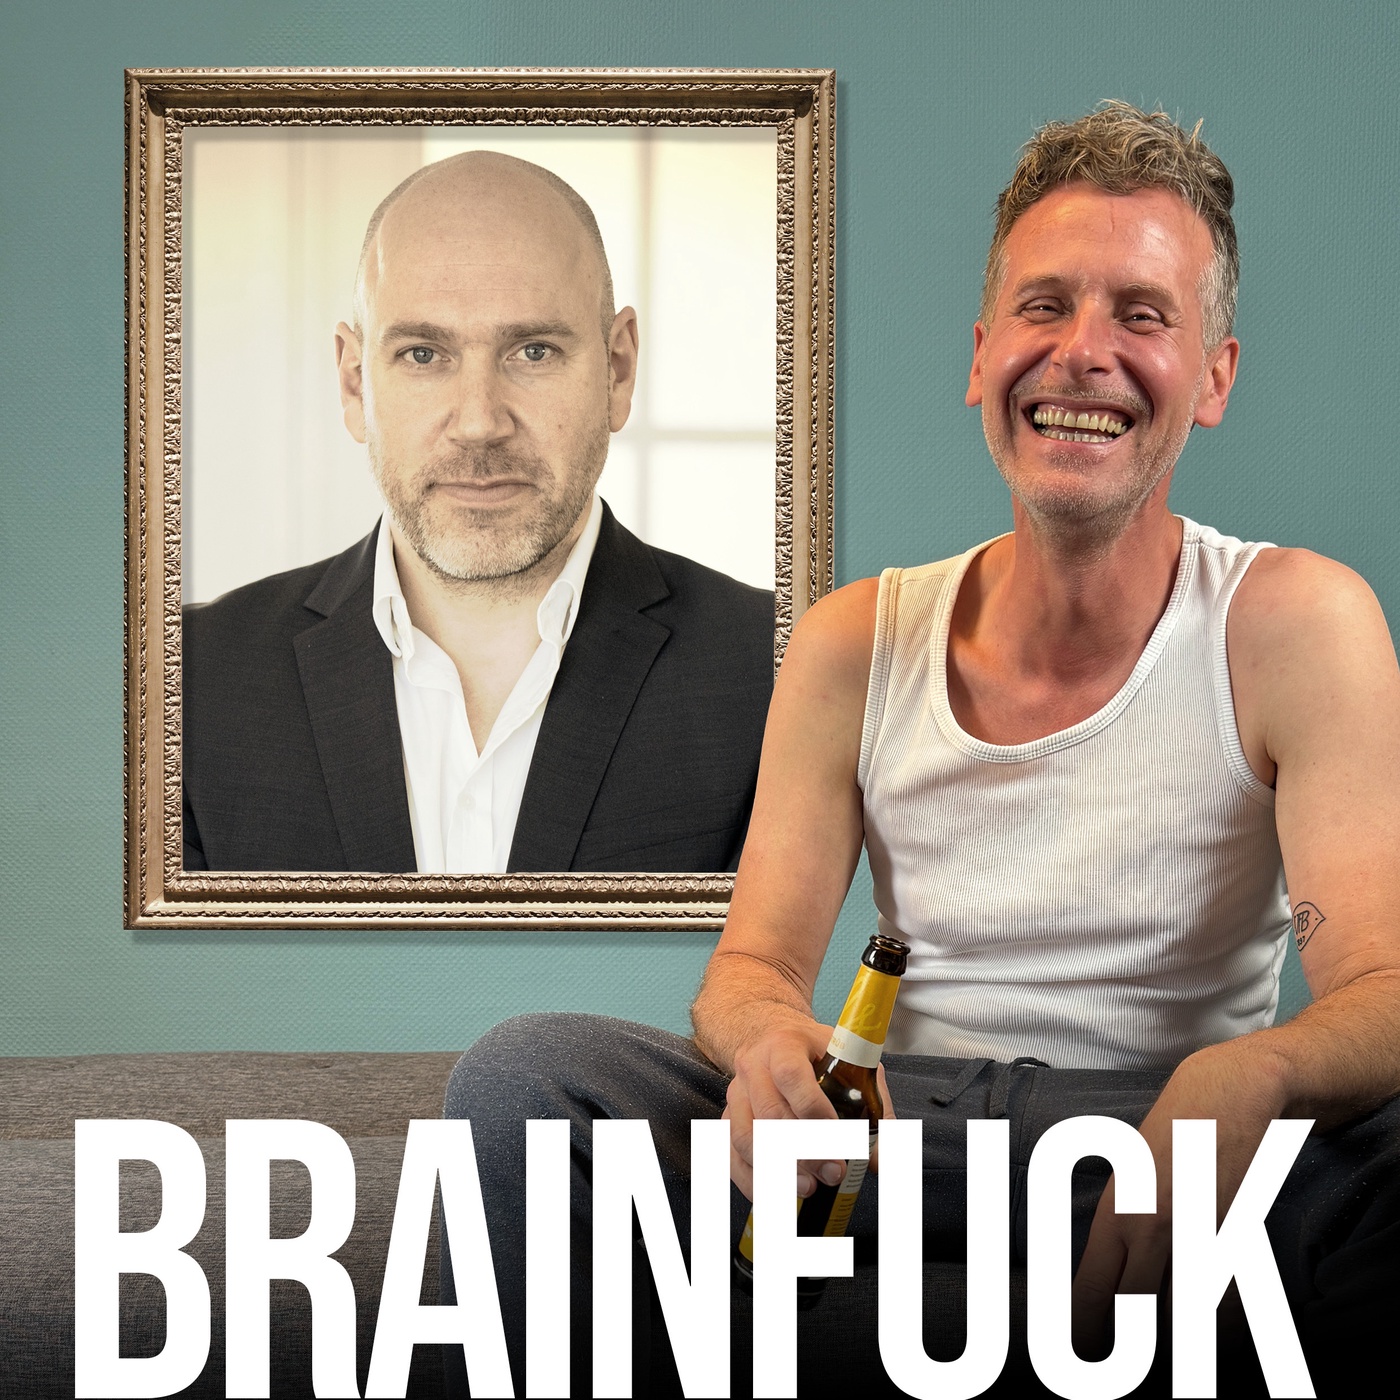 The Brainfuck